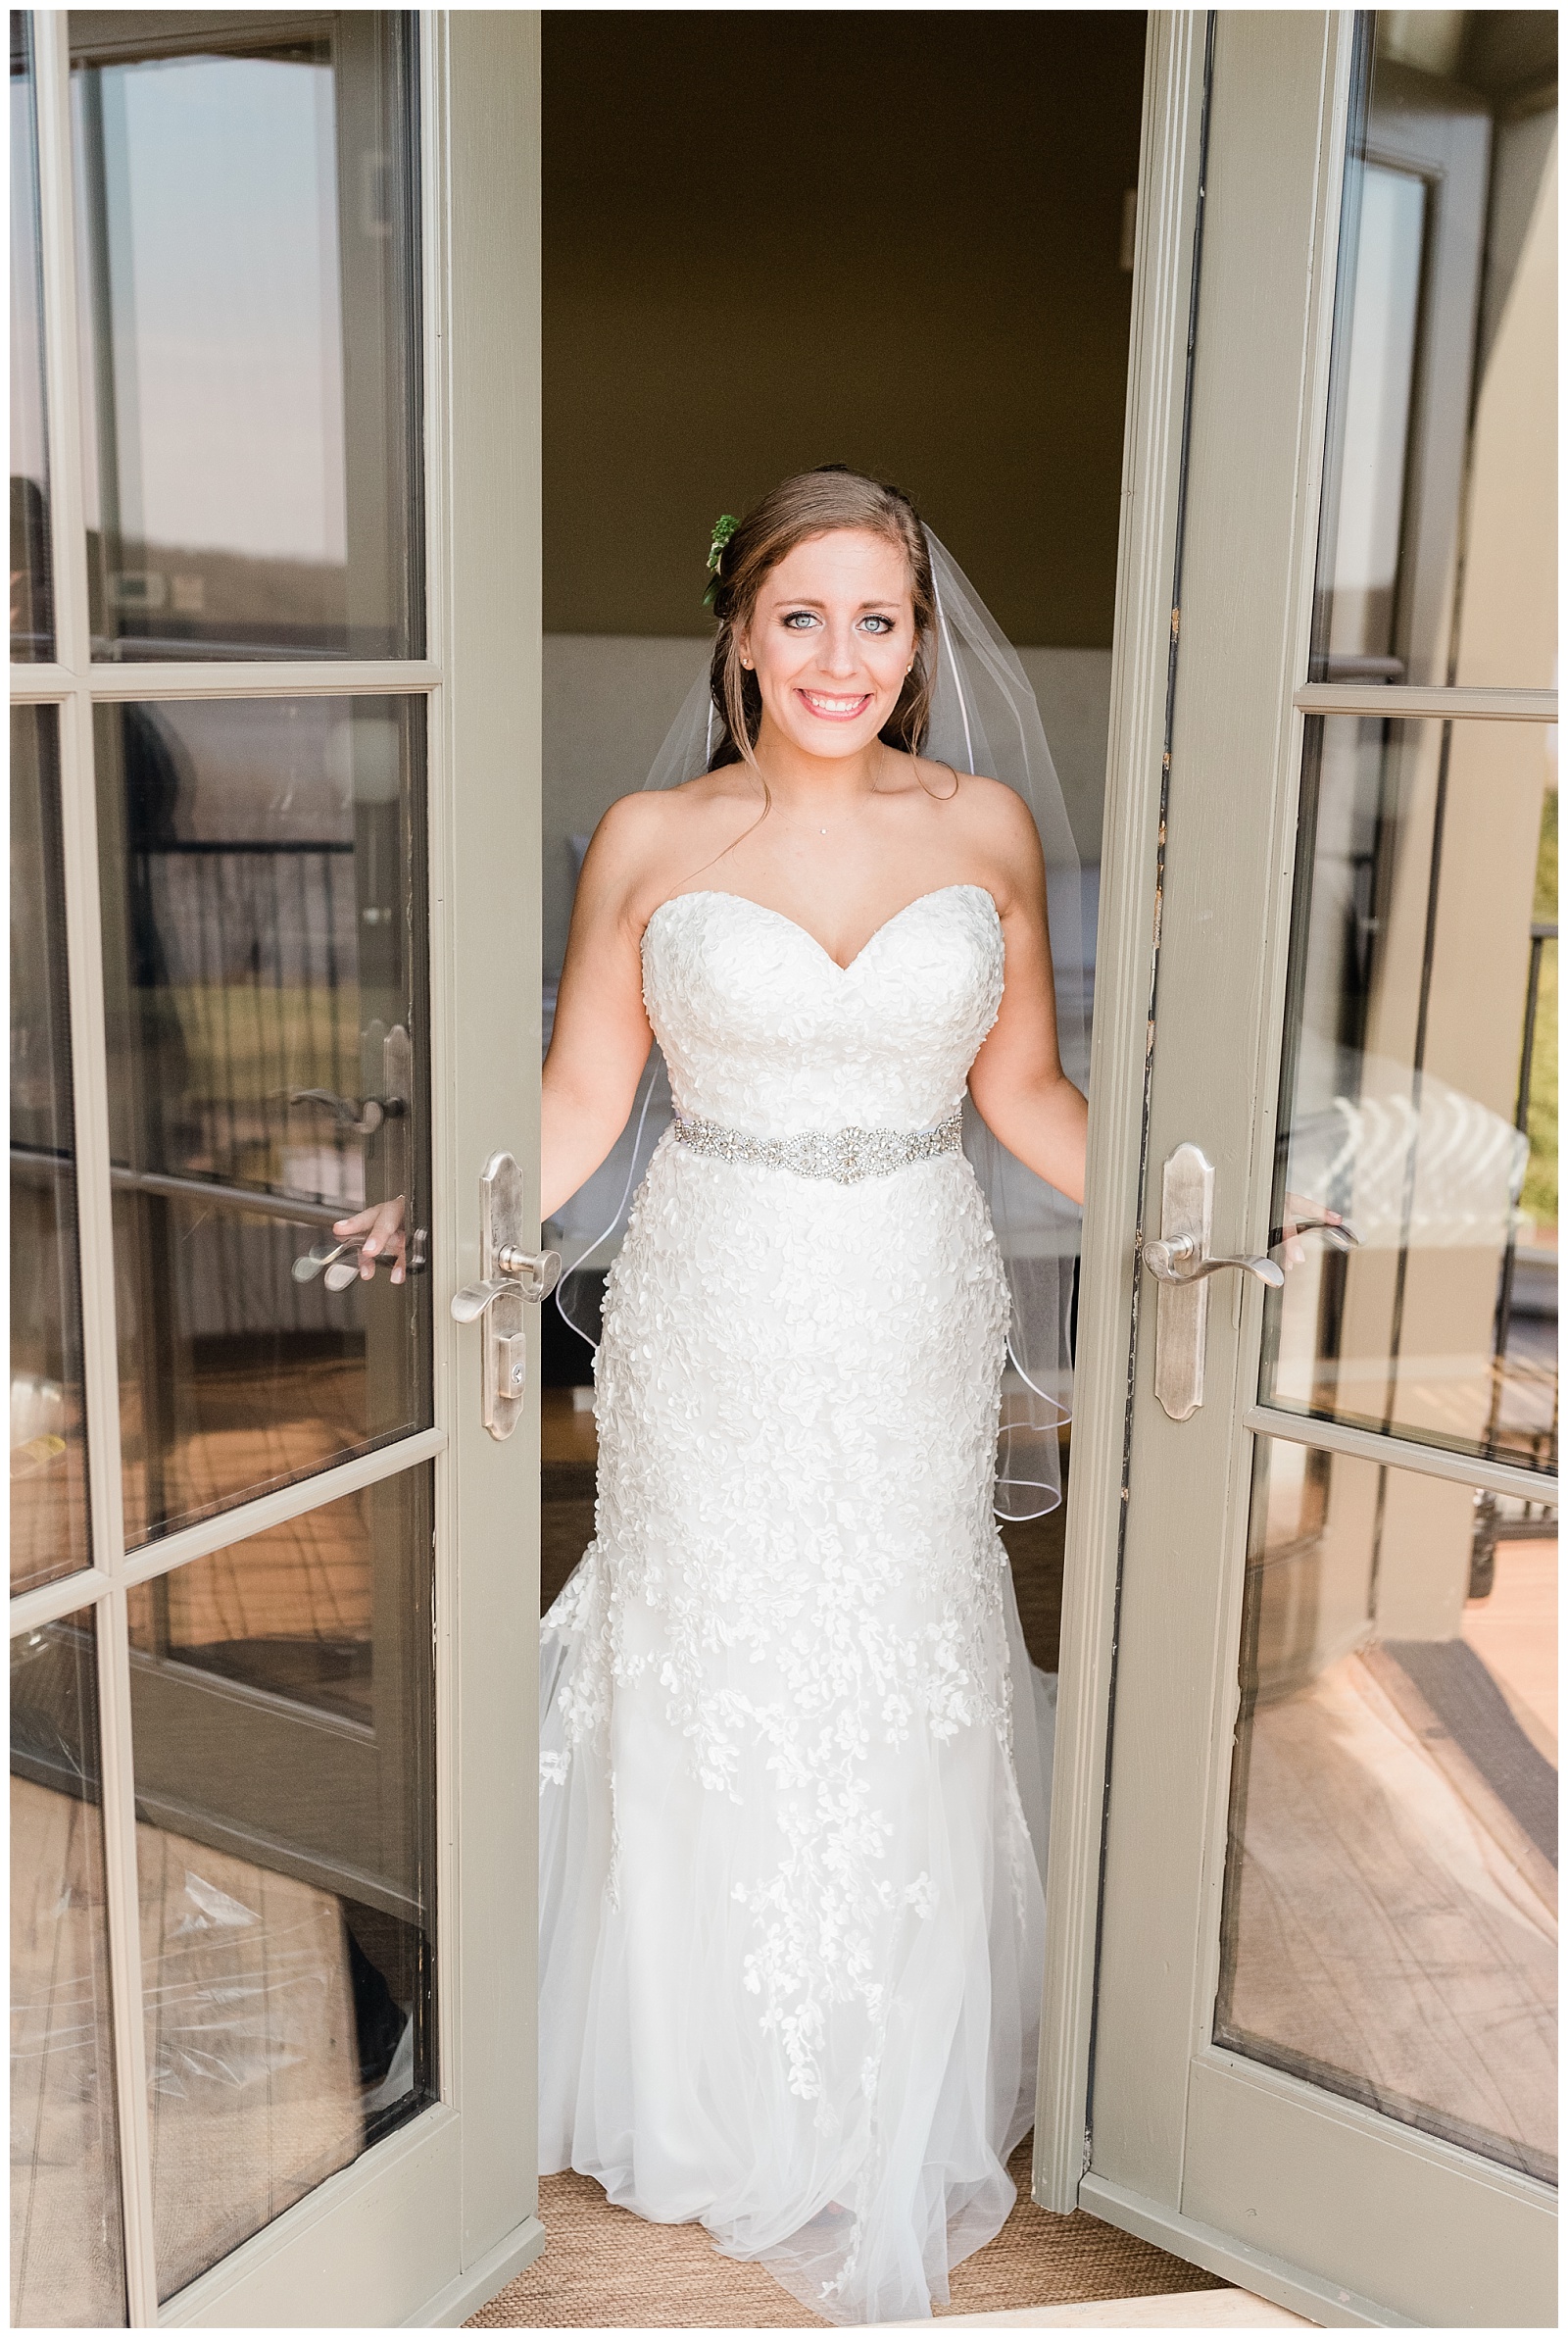 Bride opening balcony doors of the bridal suite wearing Mark Zunino wedding gown.